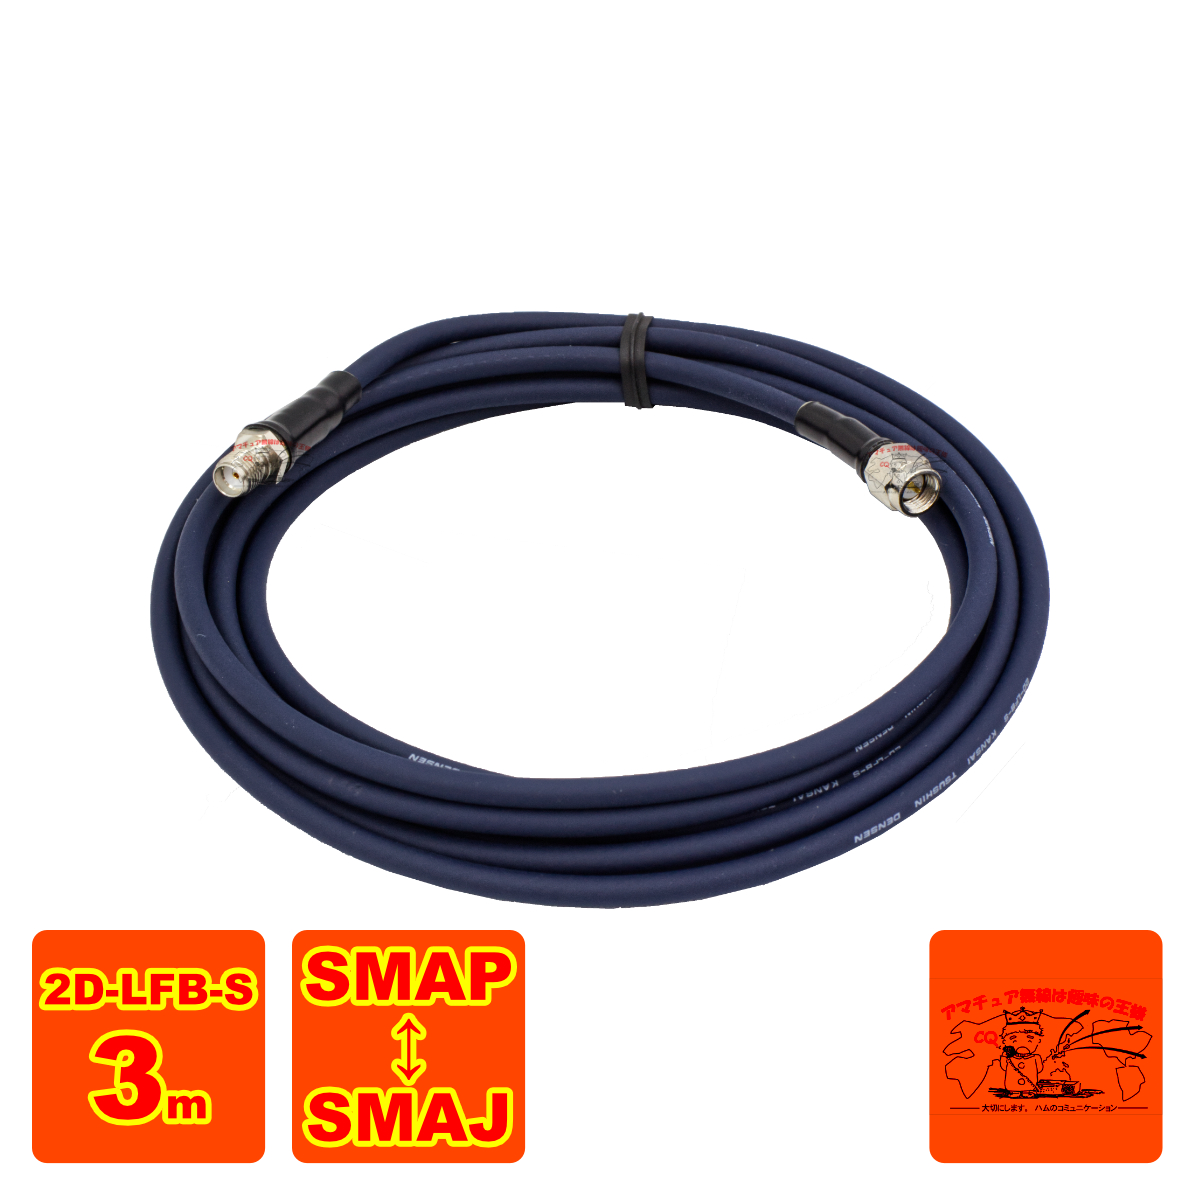 SMAJ-SMAP 2D-LFB-S 3m 延長用高周波同軸ケーブルセット 2D1SSの3m版